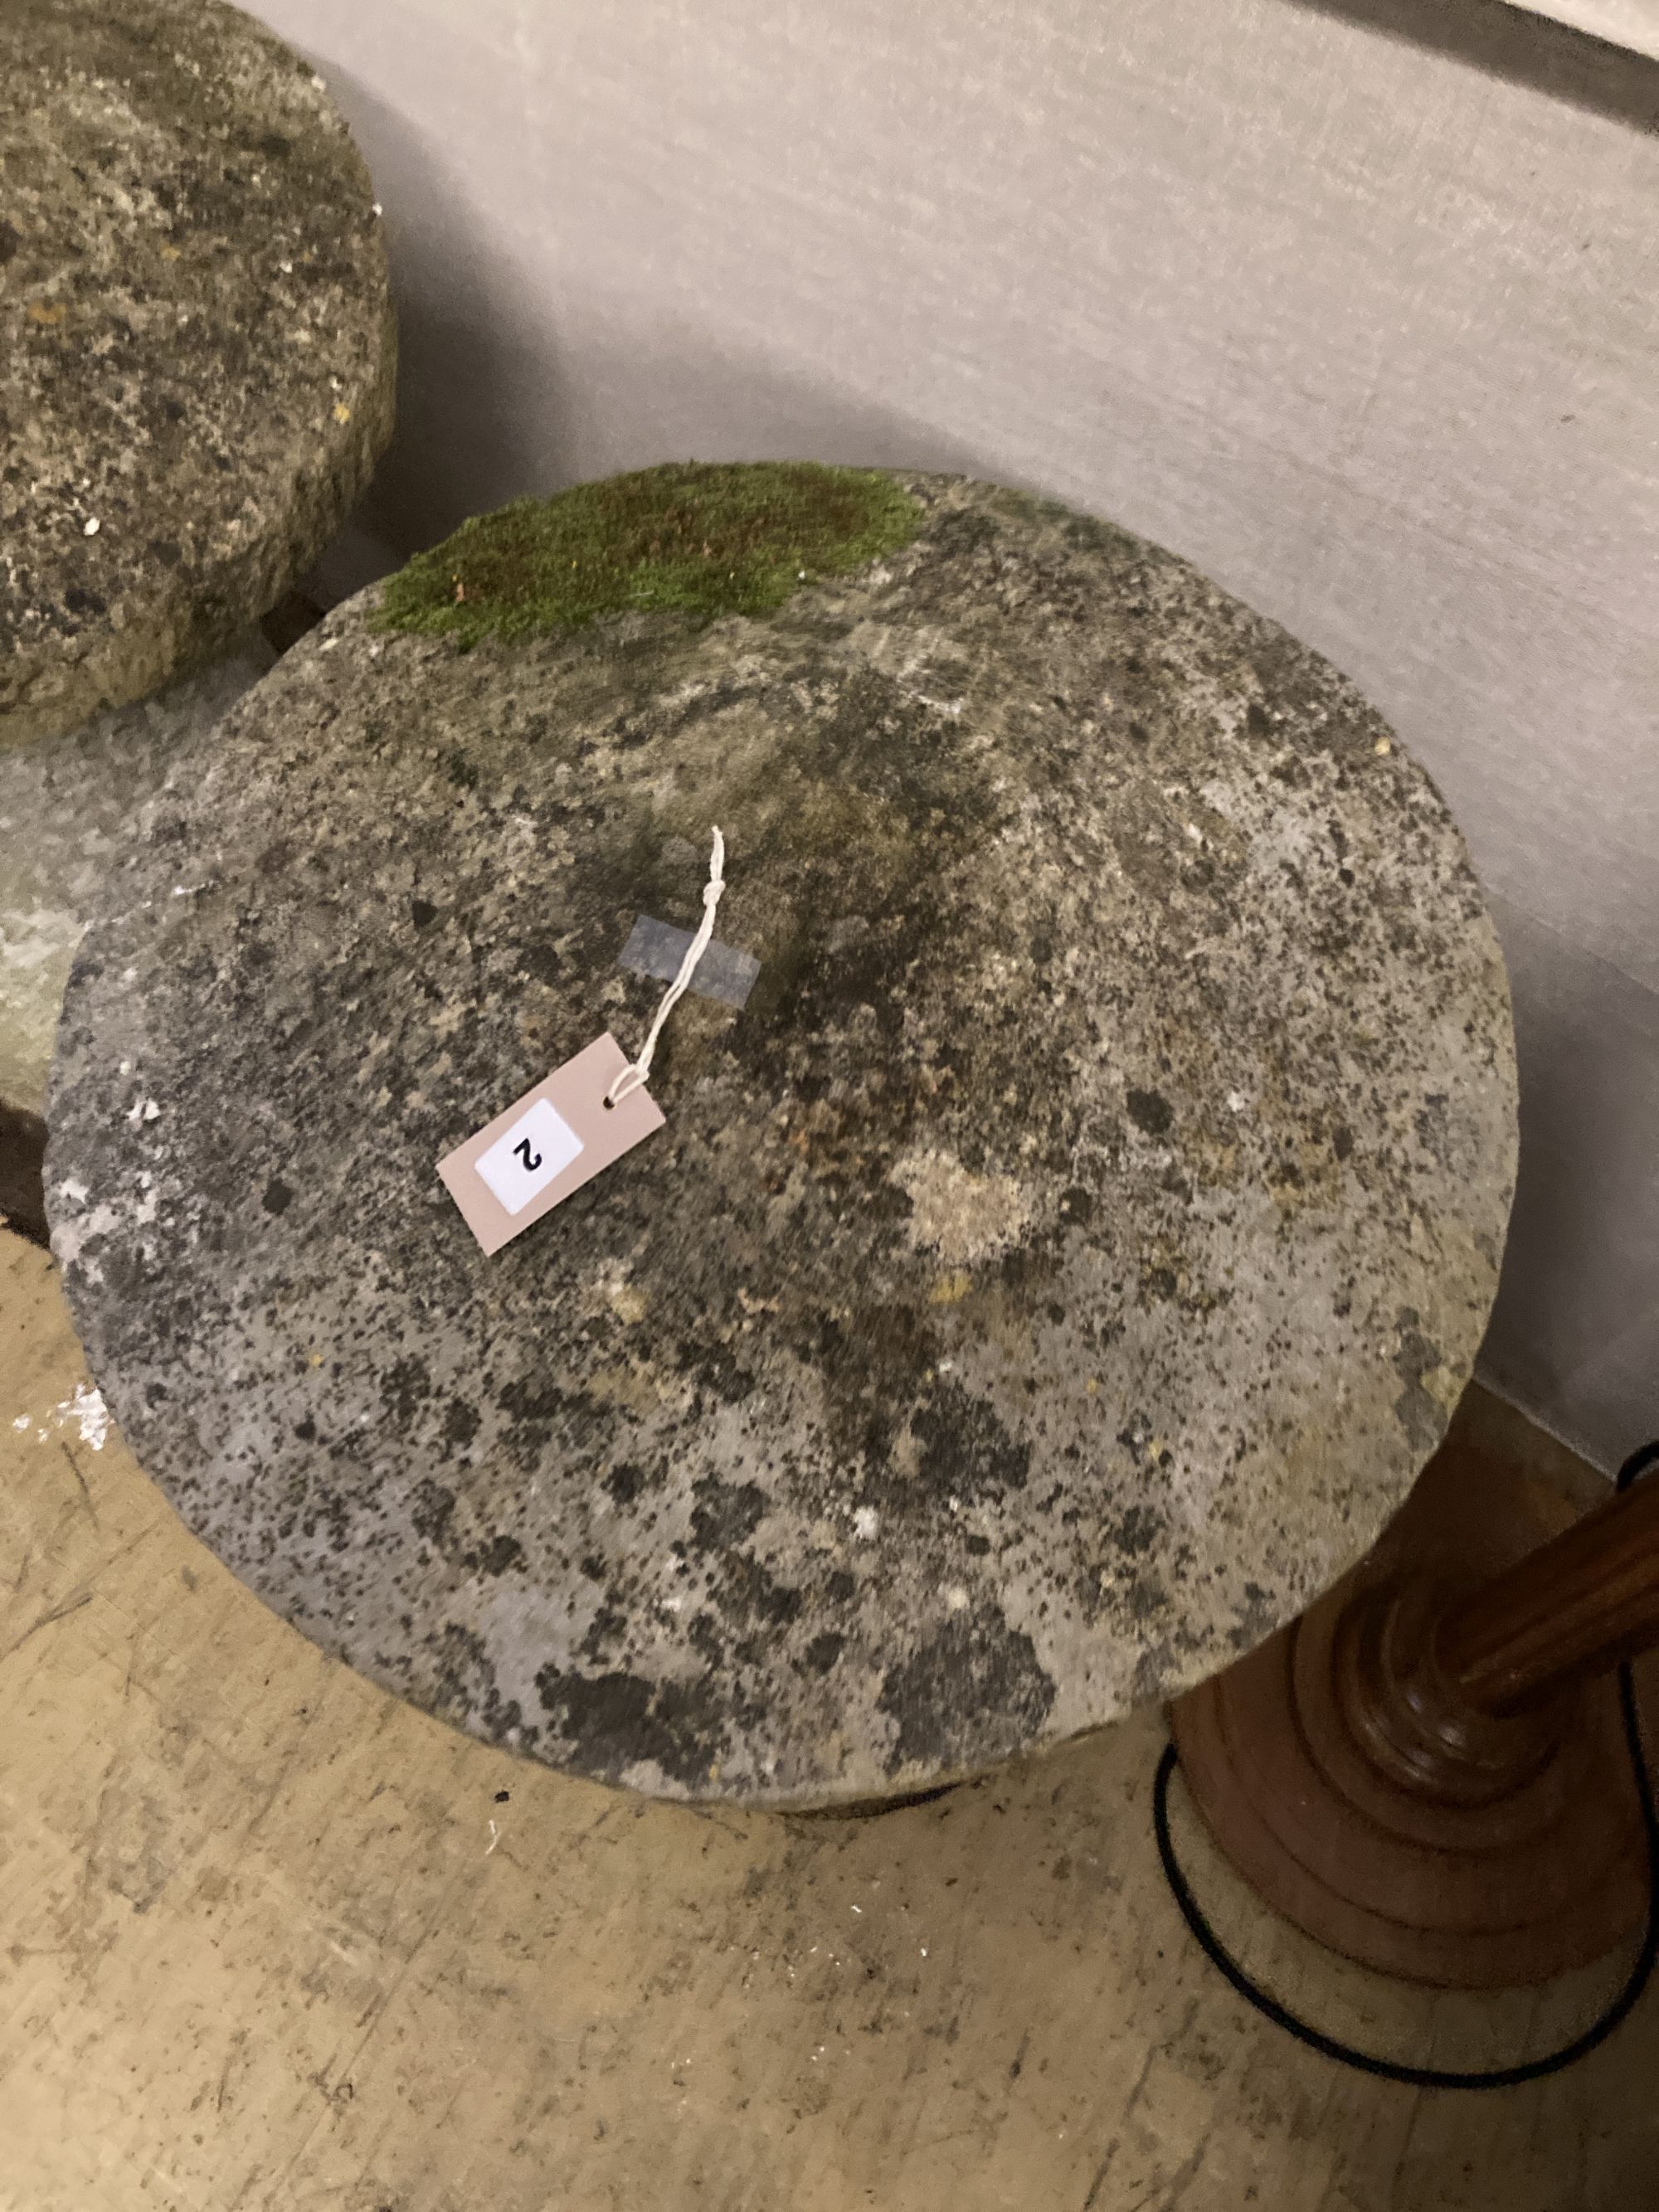 Two staddle stones, diameter 53cm, height 75cm